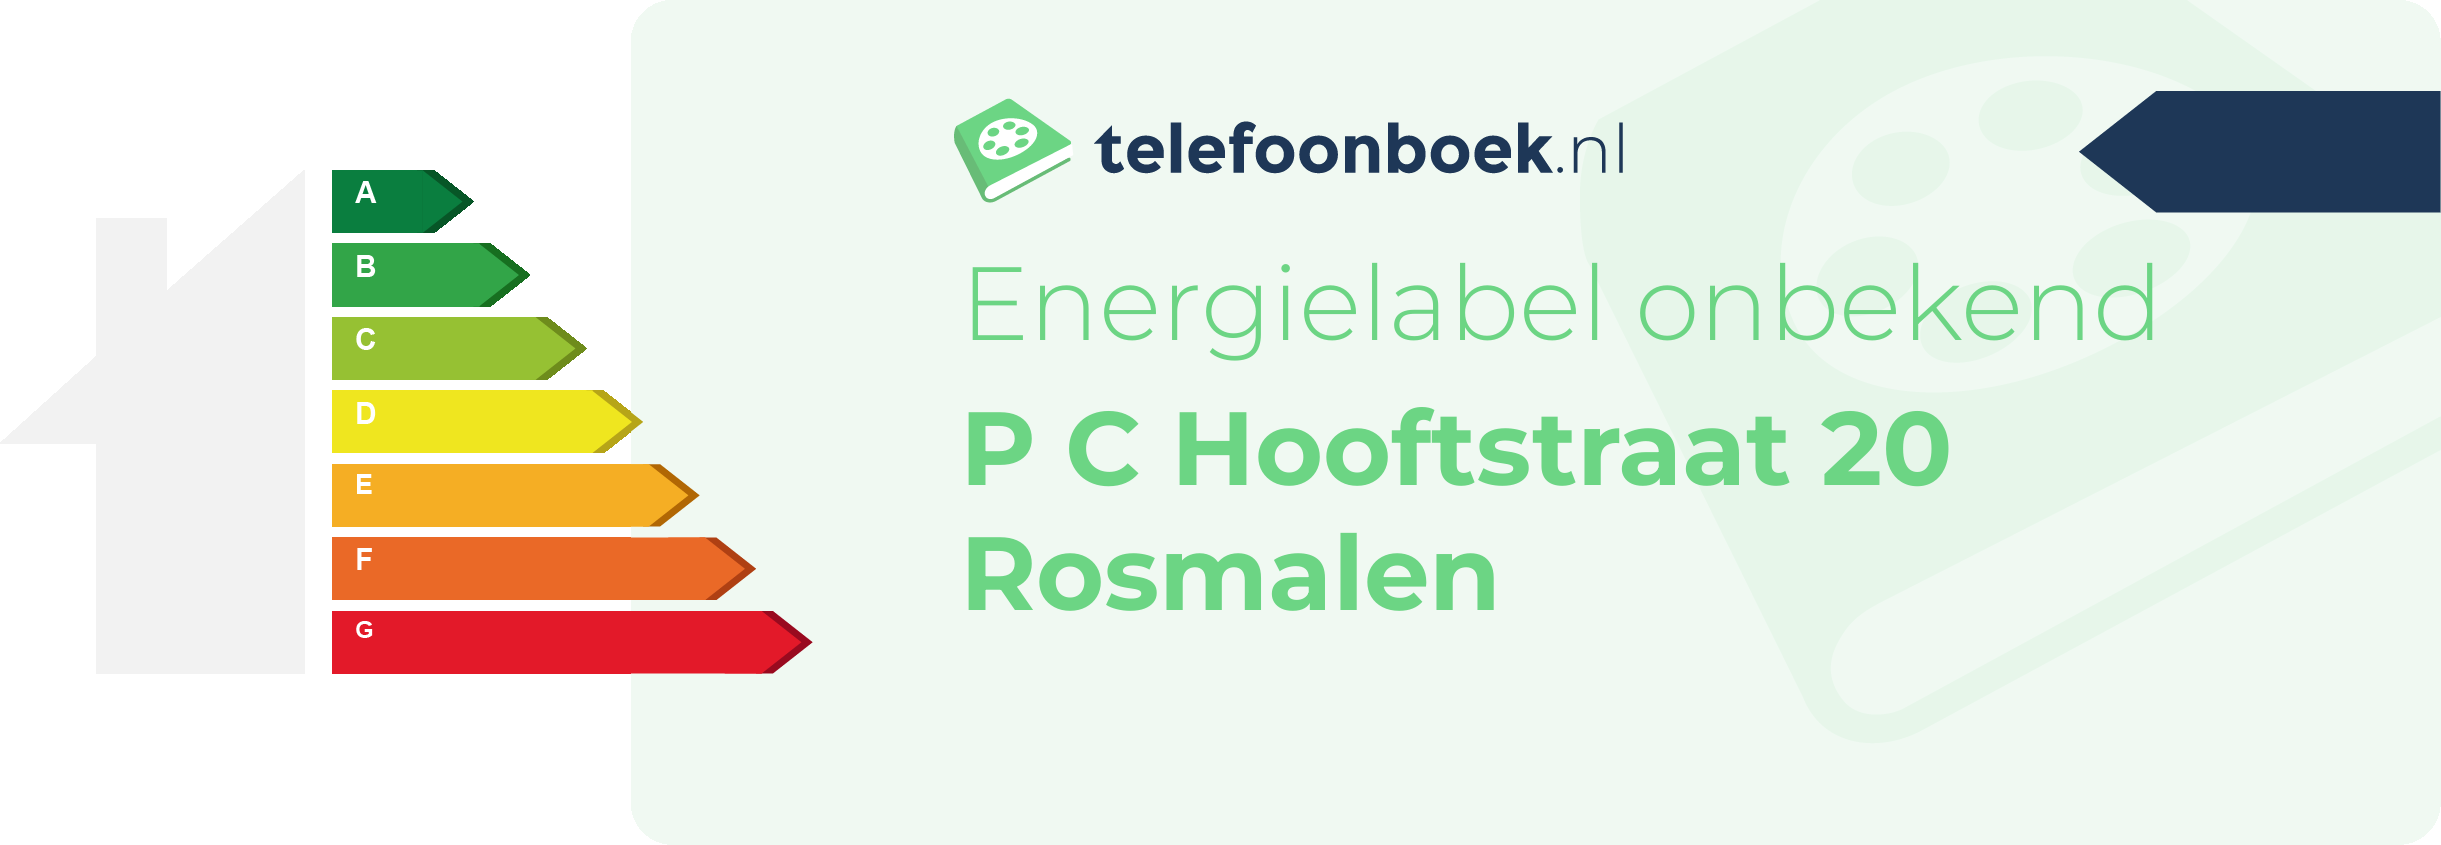 Energielabel P C Hooftstraat 20 Rosmalen